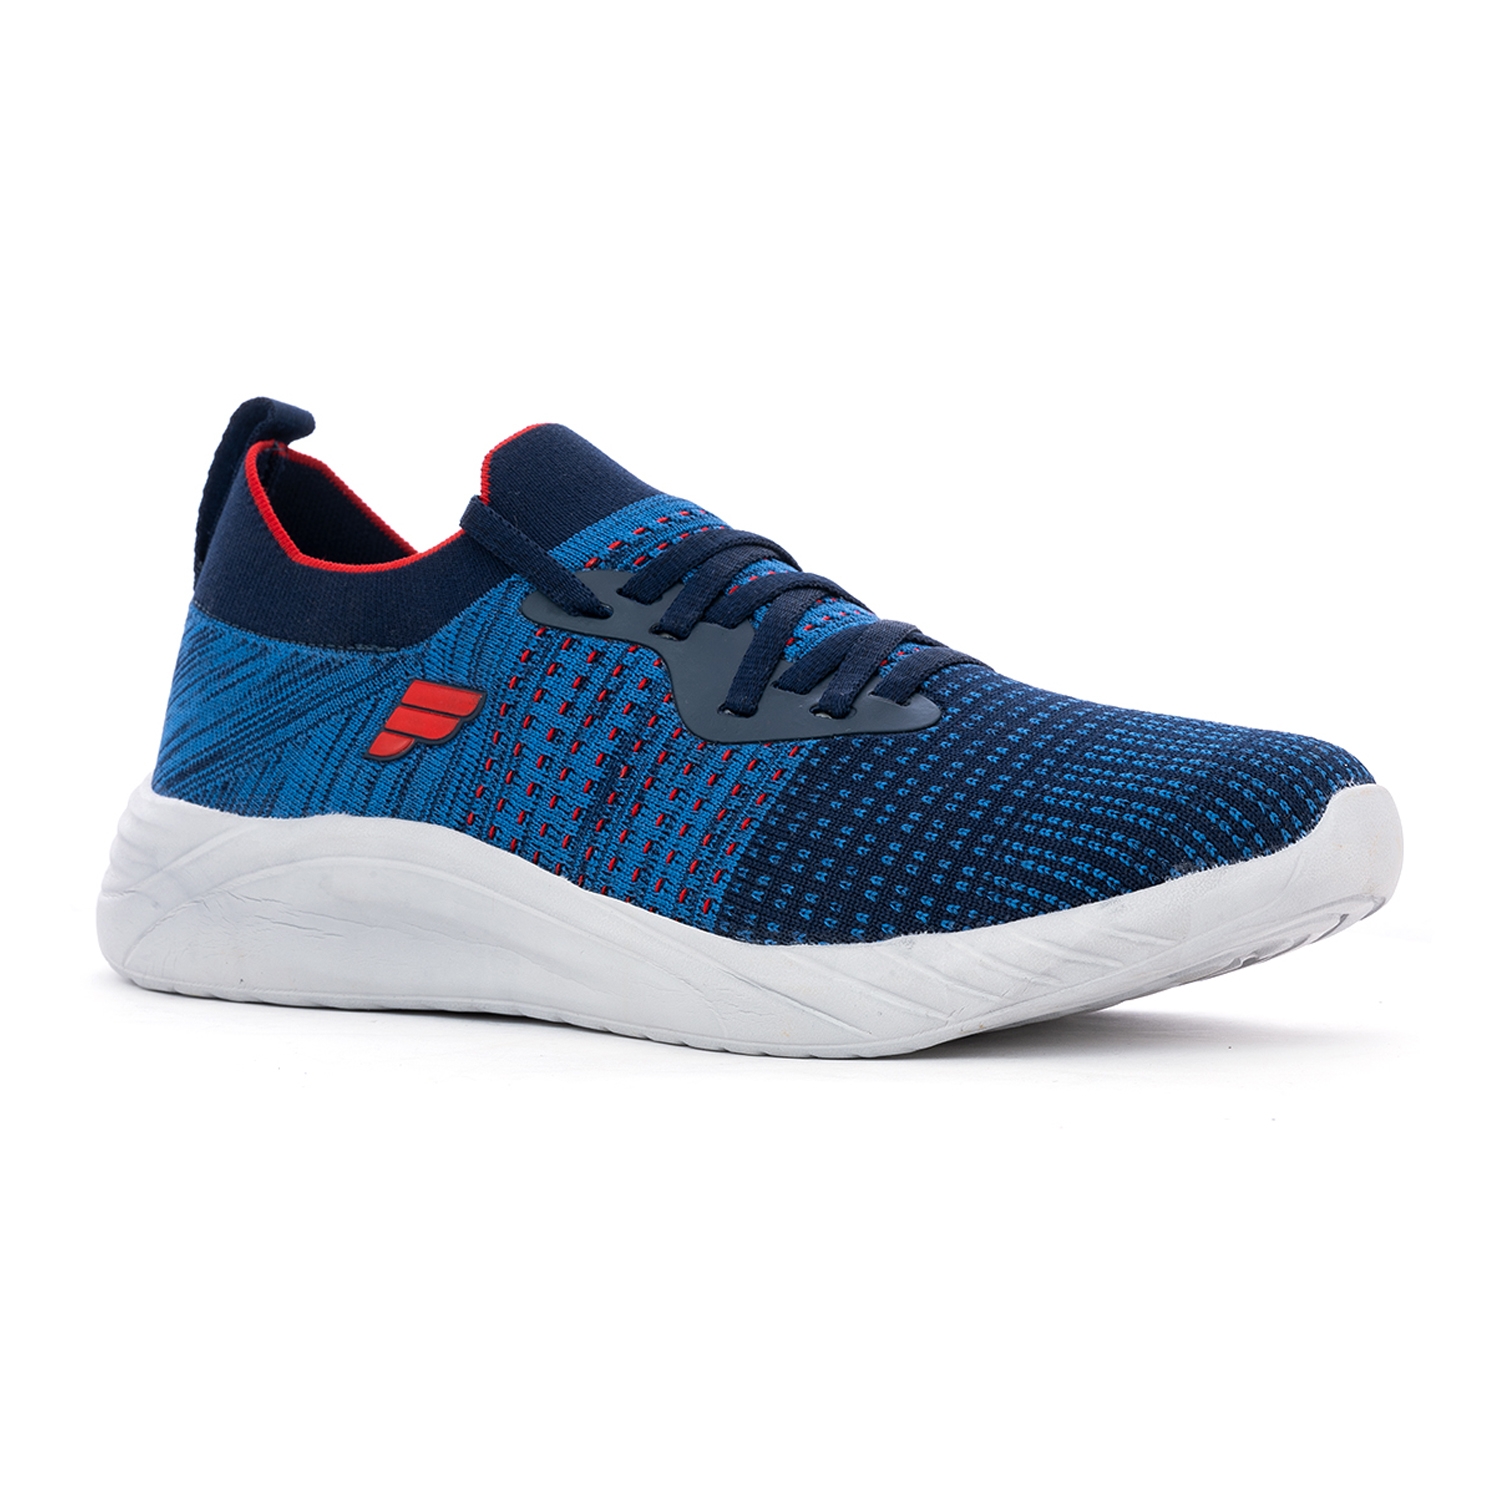 Khadim | Fitnxt Blue Running Sports Shoes for Men